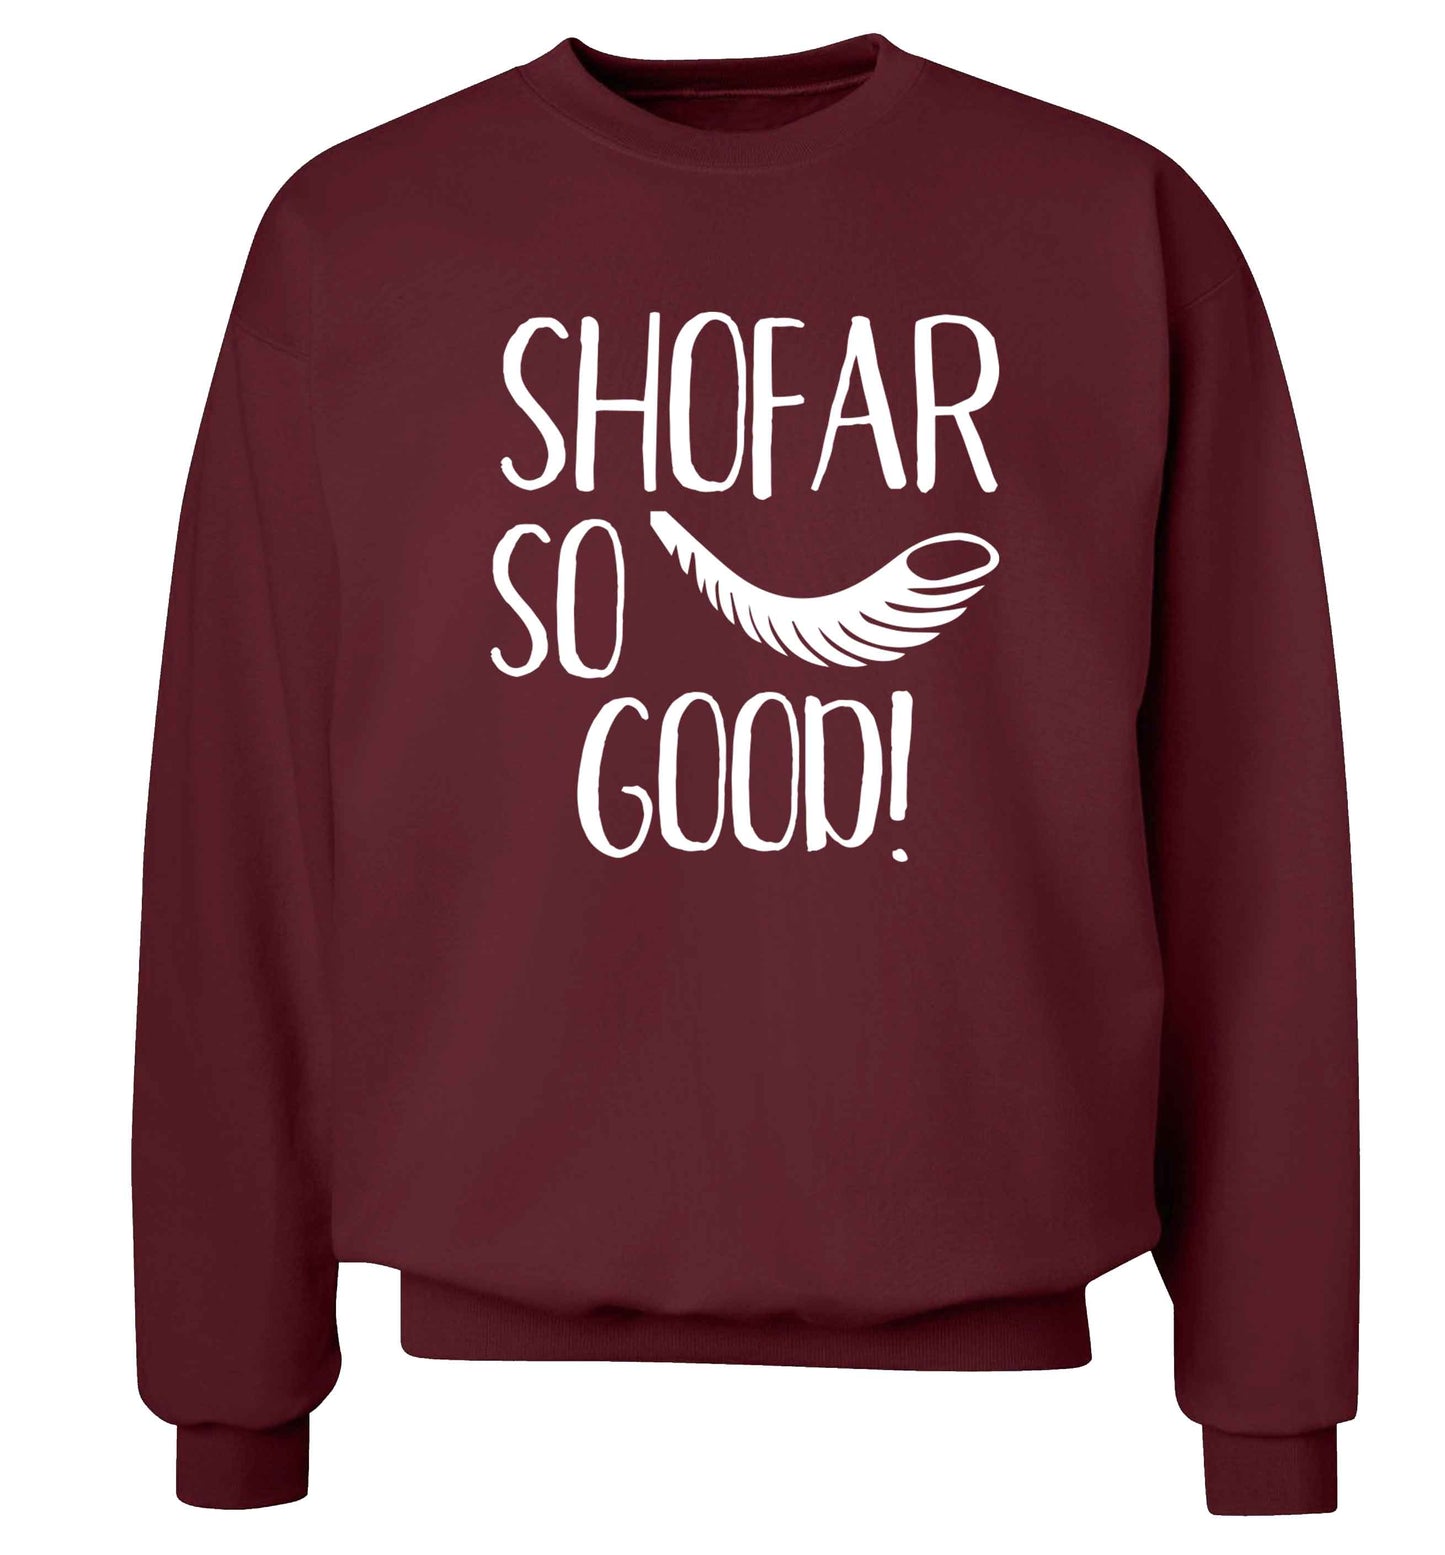 Shofar so good! Adult's unisex maroon Sweater 2XL